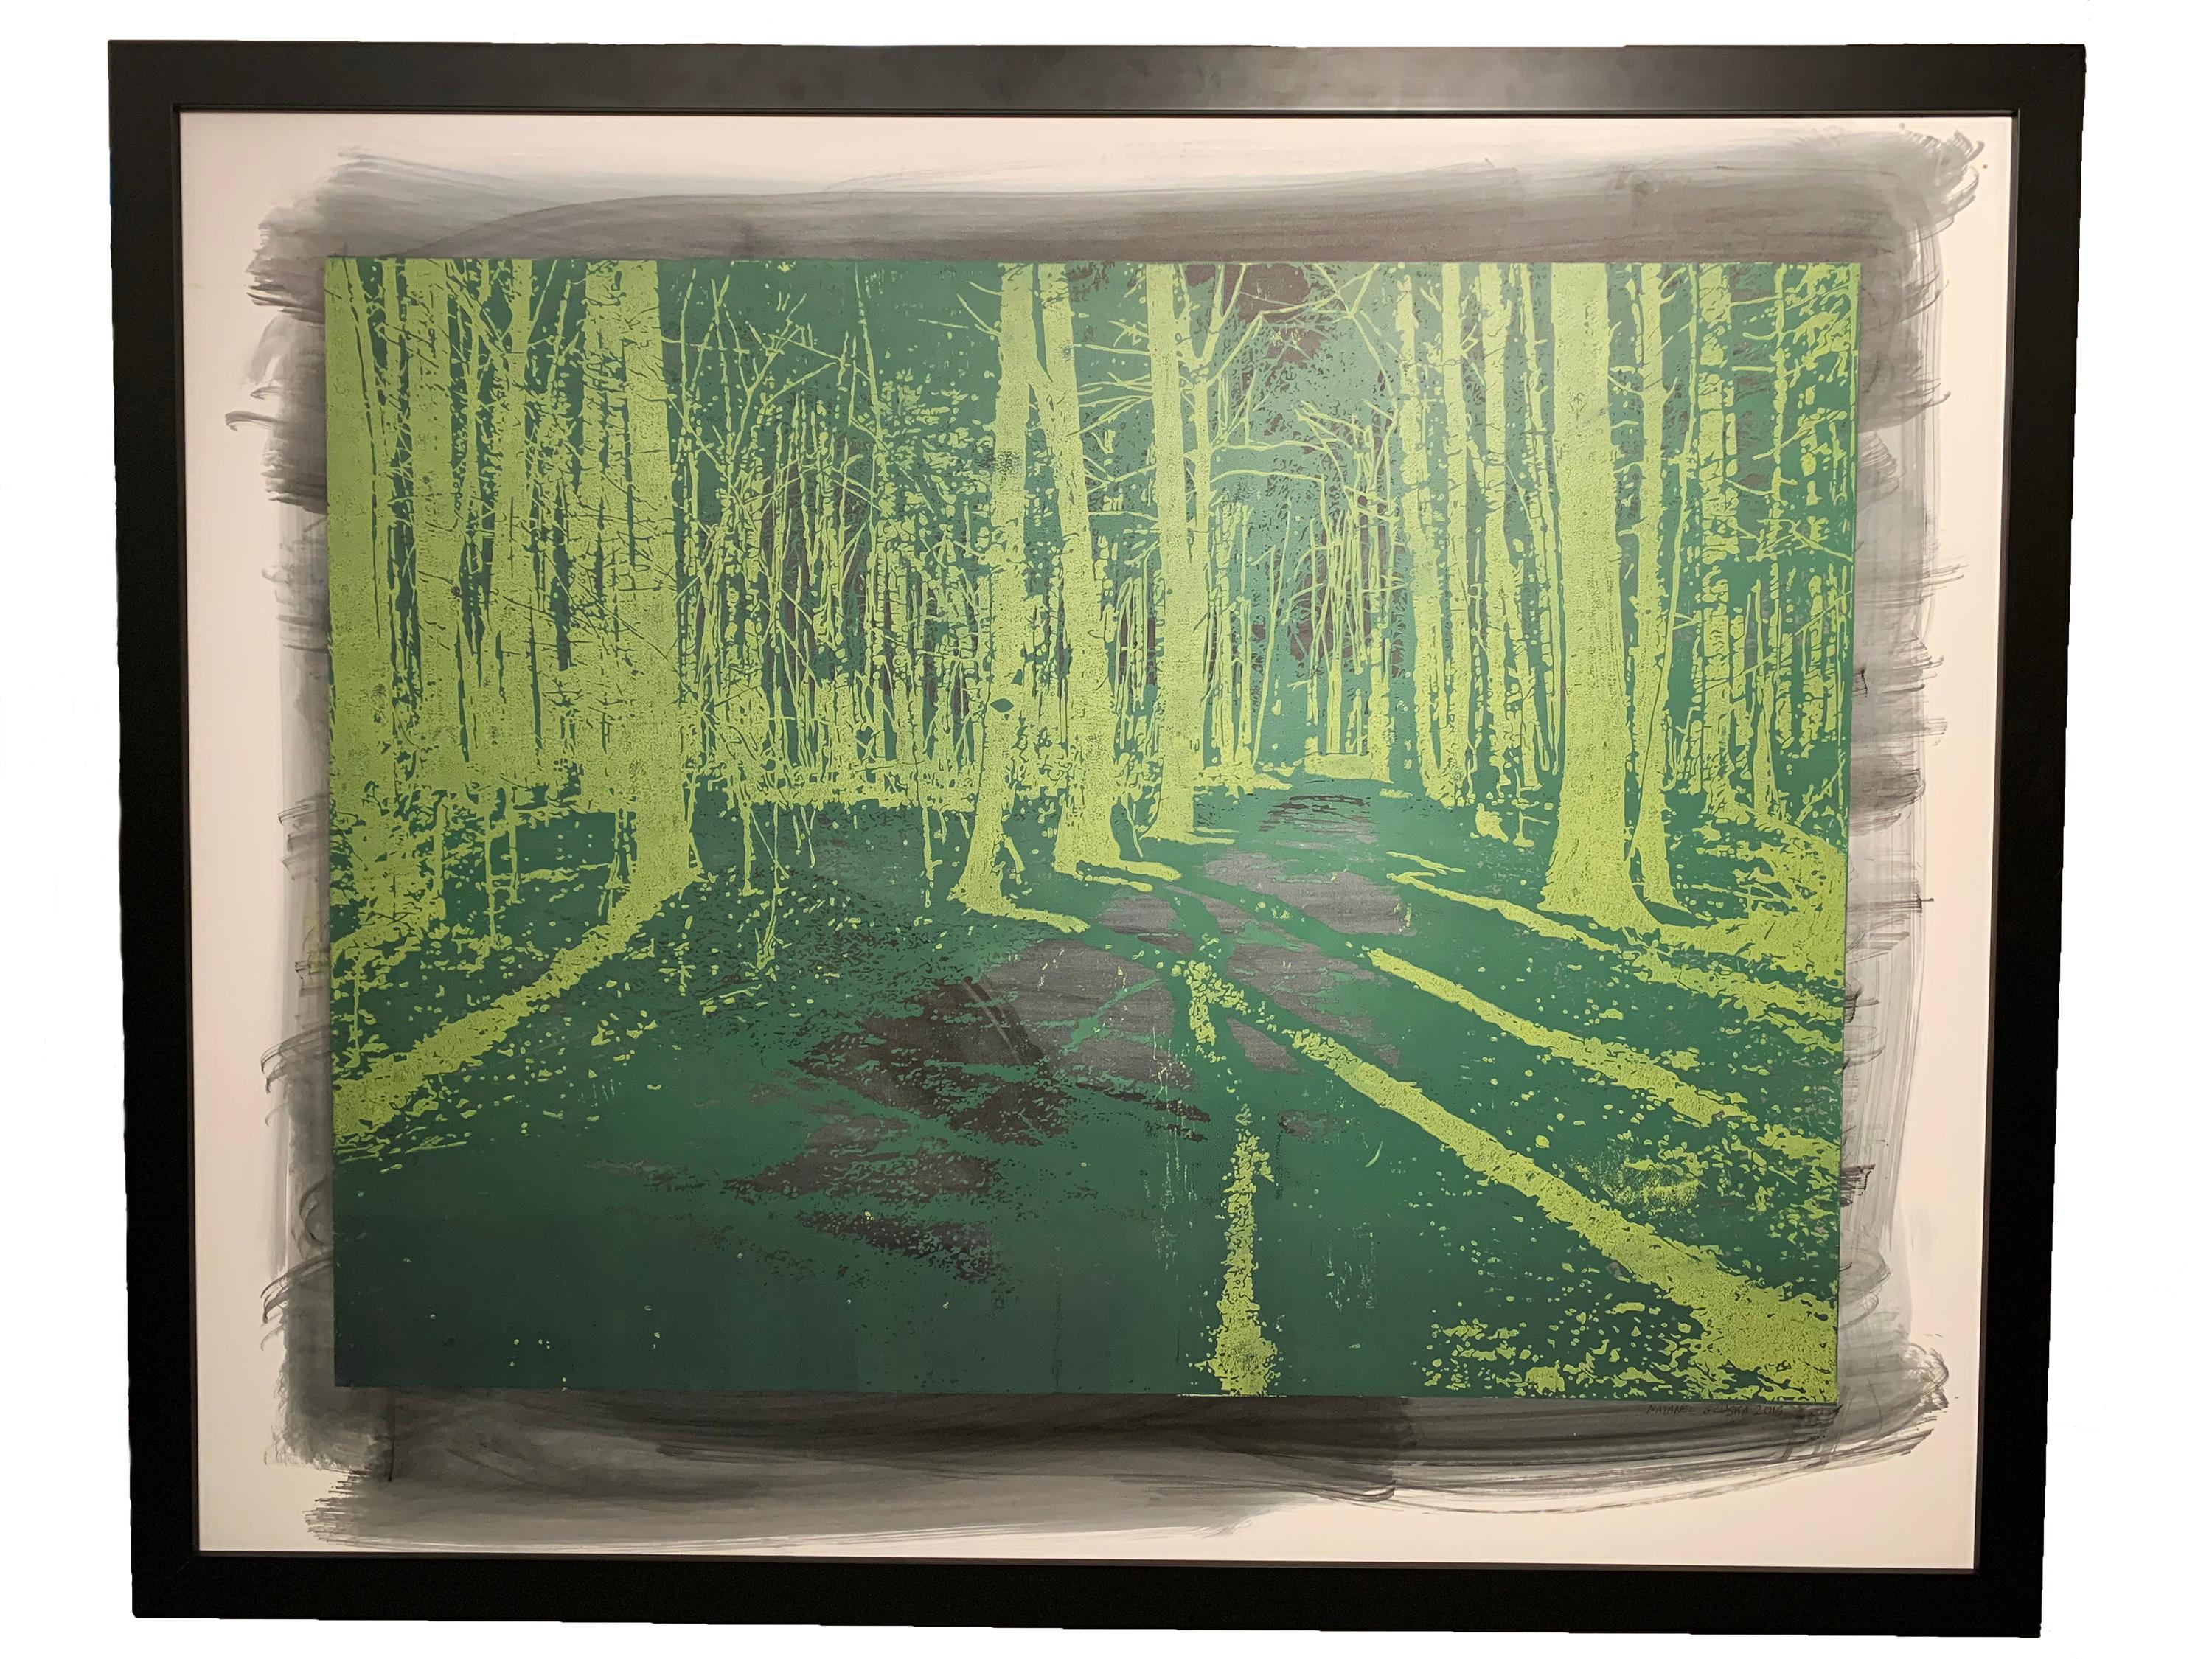 Natanel Gluska Landscape Print - Forest in Green - Wooden engraved panel - Etched and hand printed - Framed